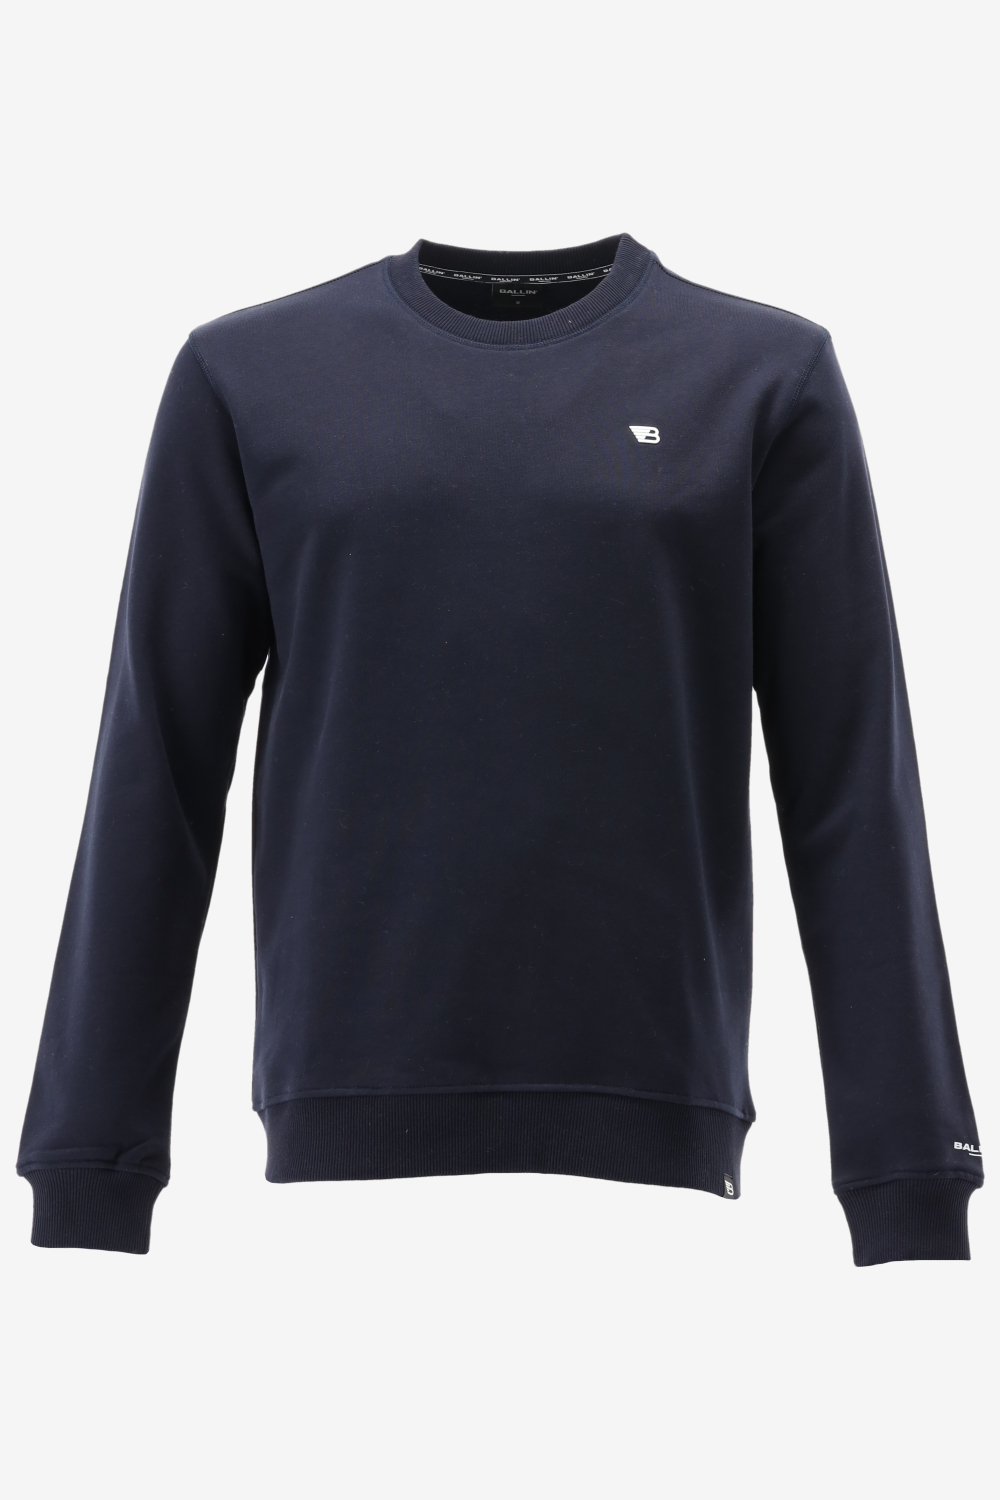 Ballin Amsterdam - Heren Regular Fit Original Sweater - Blauw - Maat S